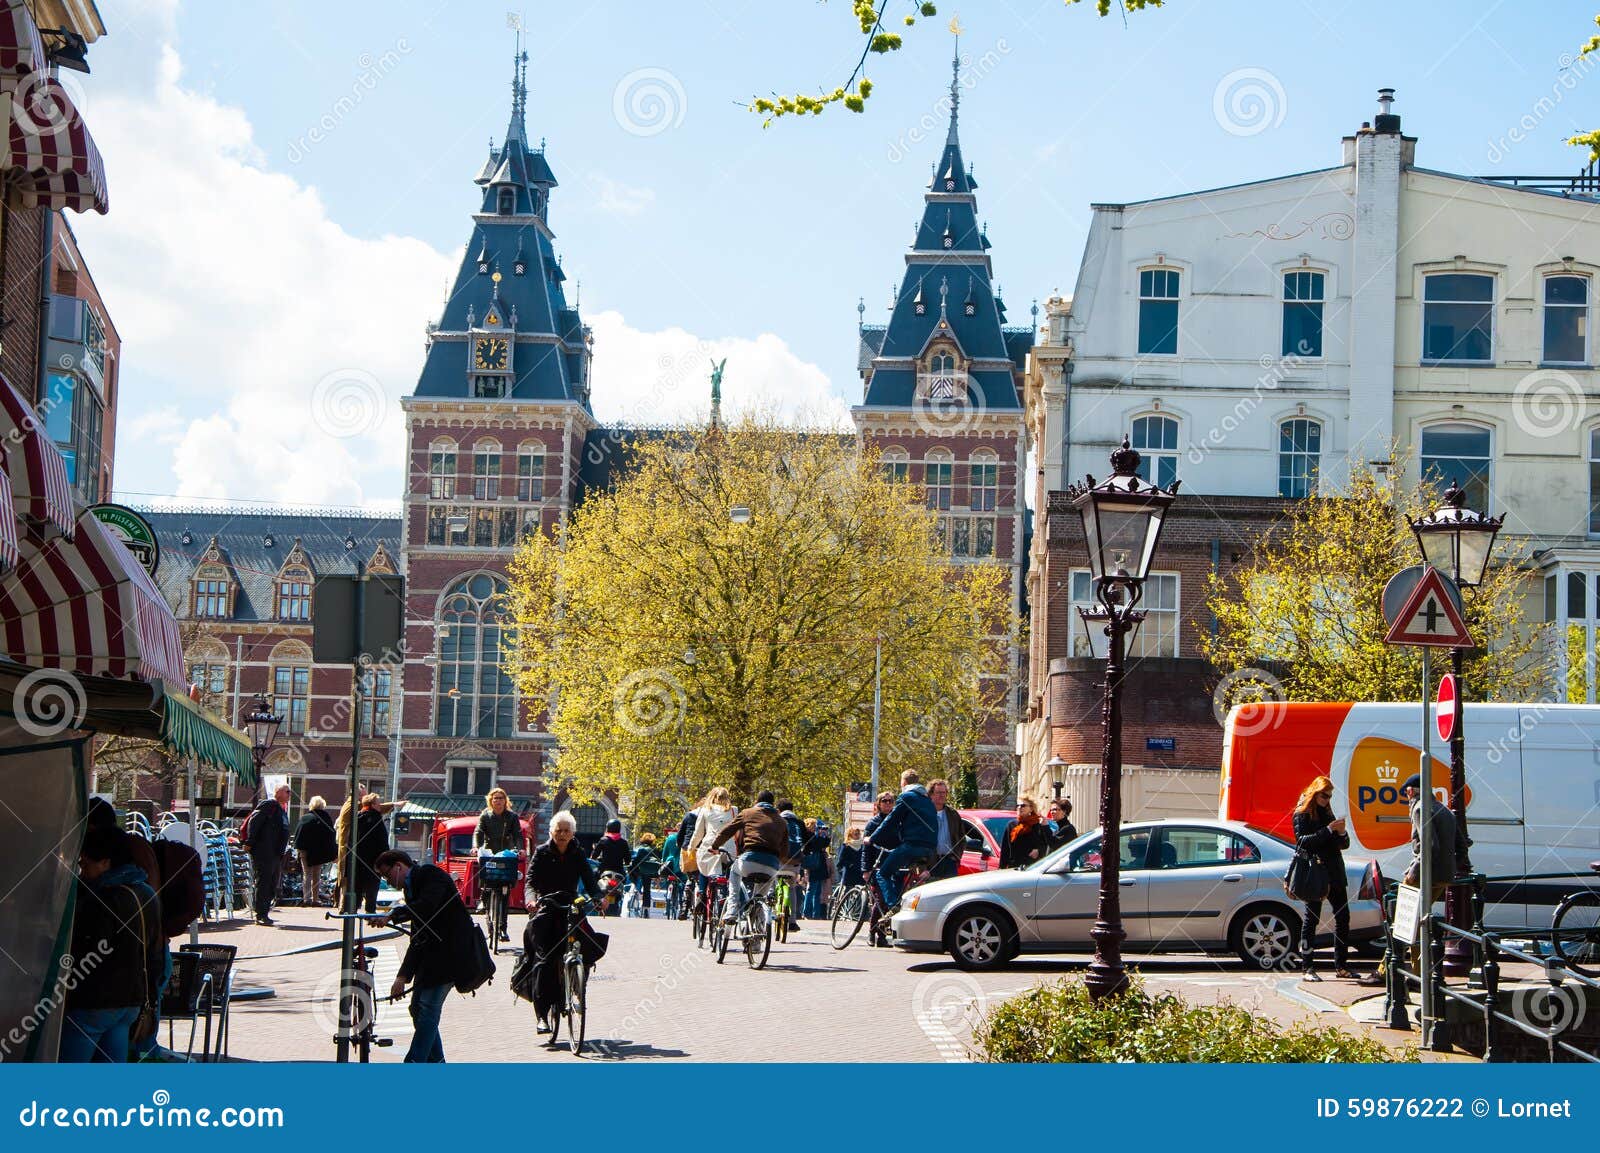 AMSTERDAM-APRIL 30 ：当地人民在阿姆斯特丹街道骑自行车， Rijksmuseum是可看见的在背景中. AMSTERDAM-APRIL 30 ：当地人民在阿姆斯特丹街道骑自行车， Rijksmuseum是可看见的在2015年4月30日，荷兰的背景中